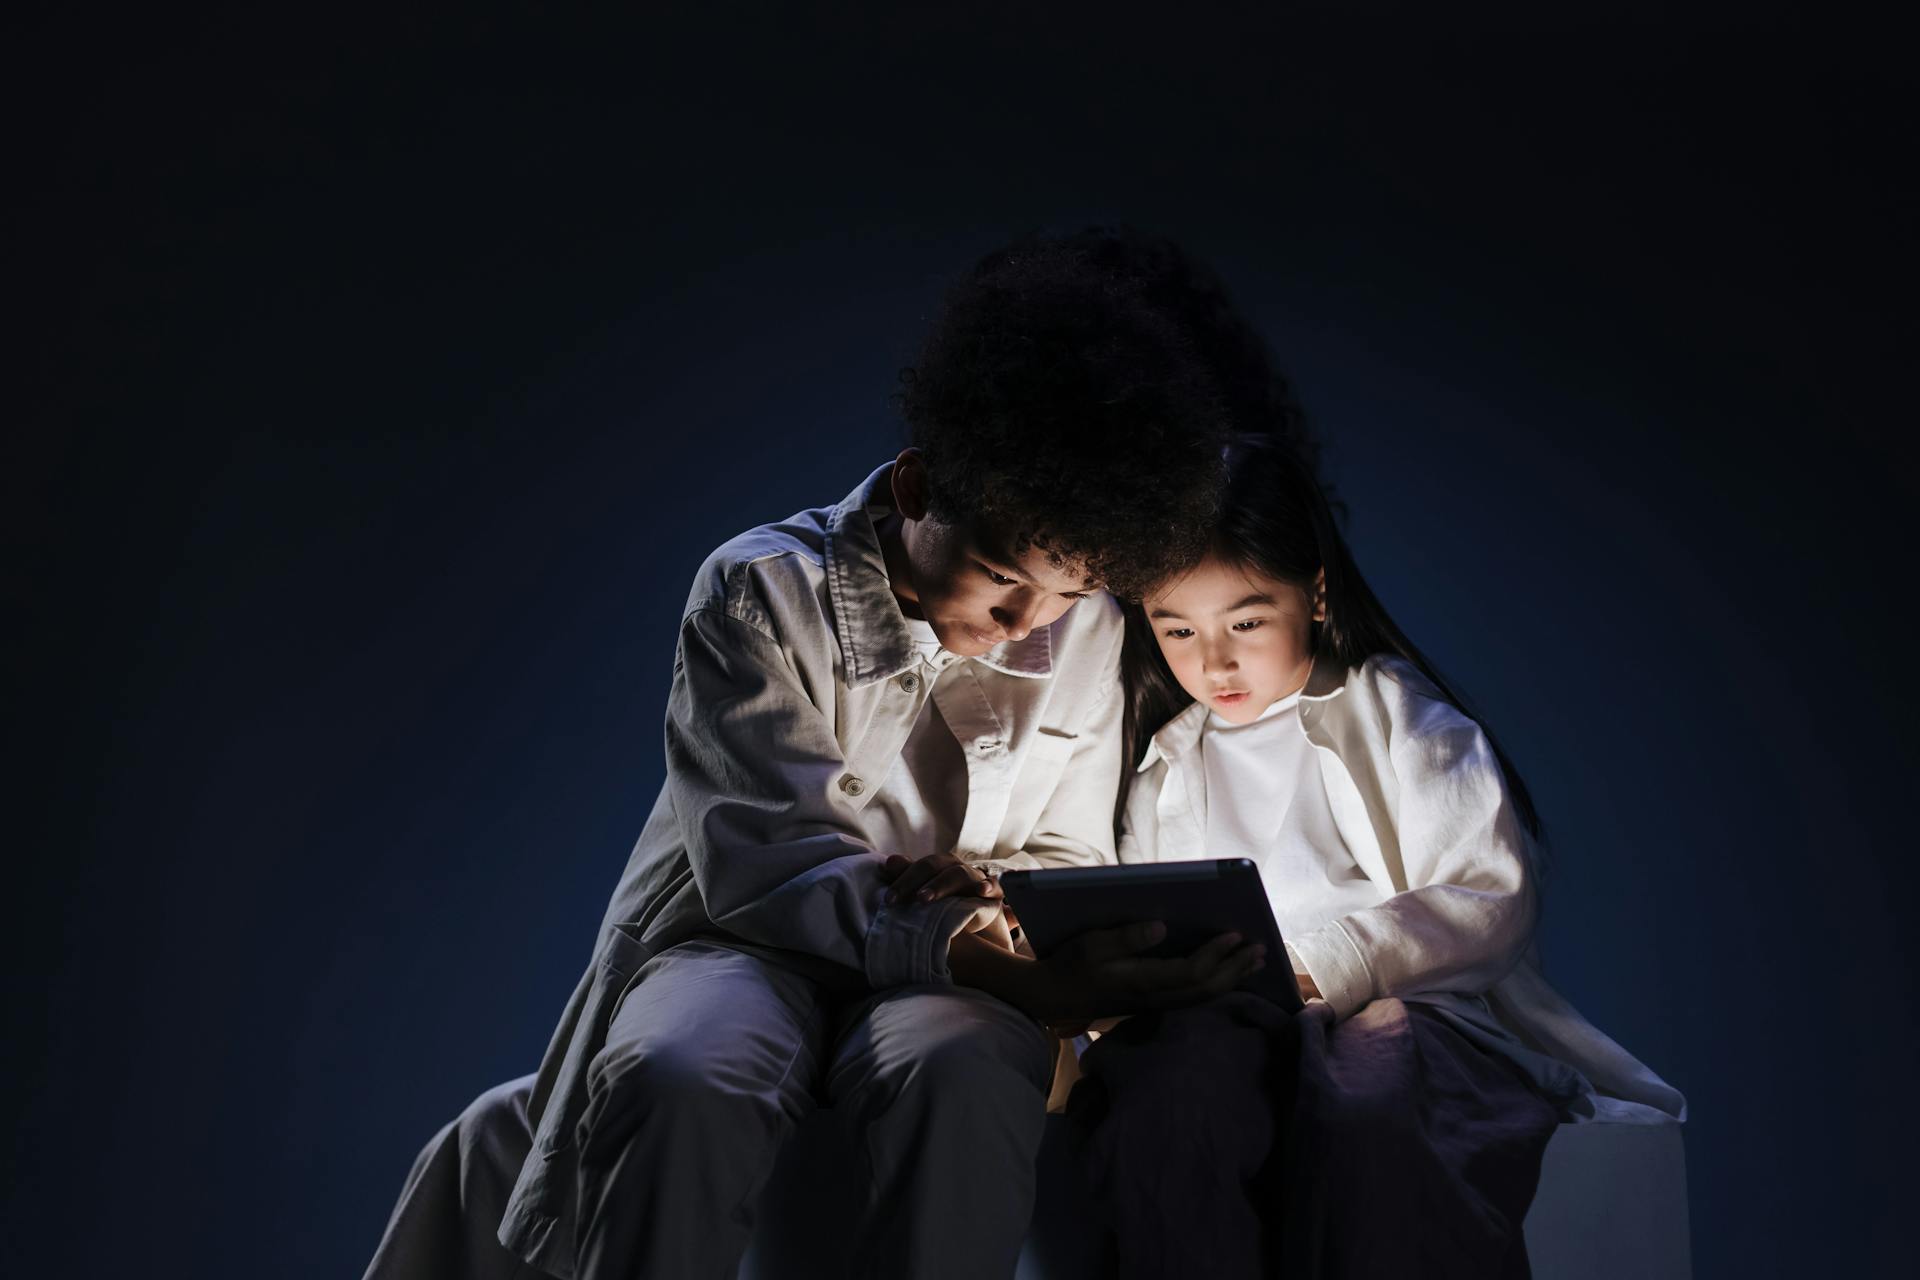 Teenage children sitting together in dark over bright screen of digital pad